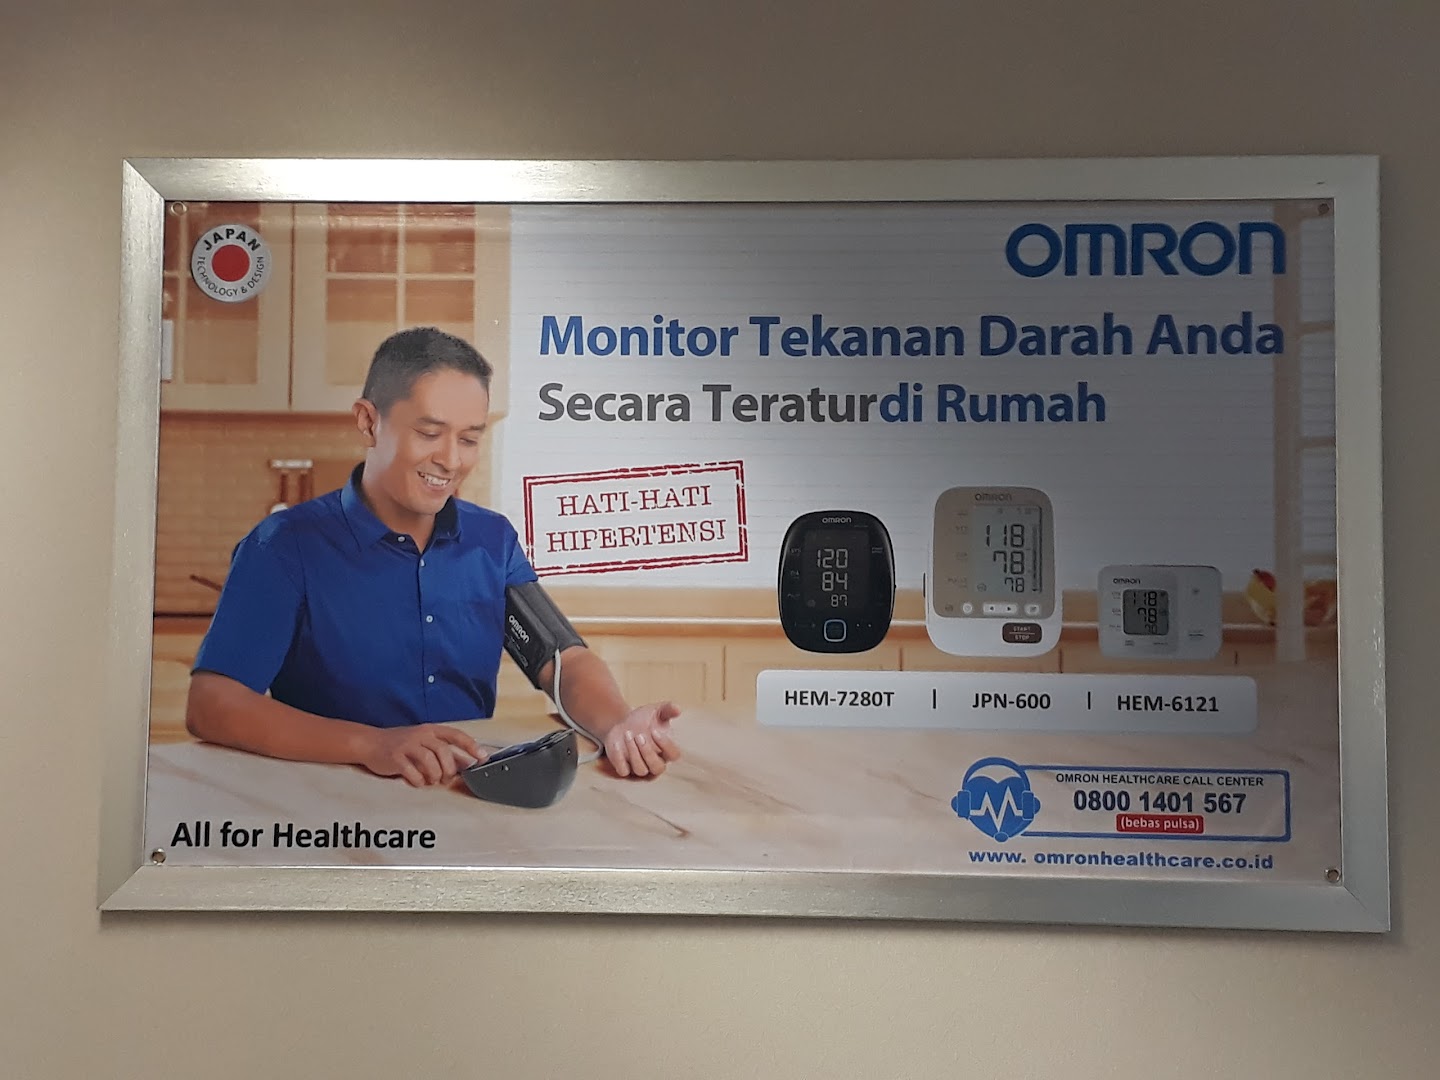 Gambar Omron Healthcare Indonesia